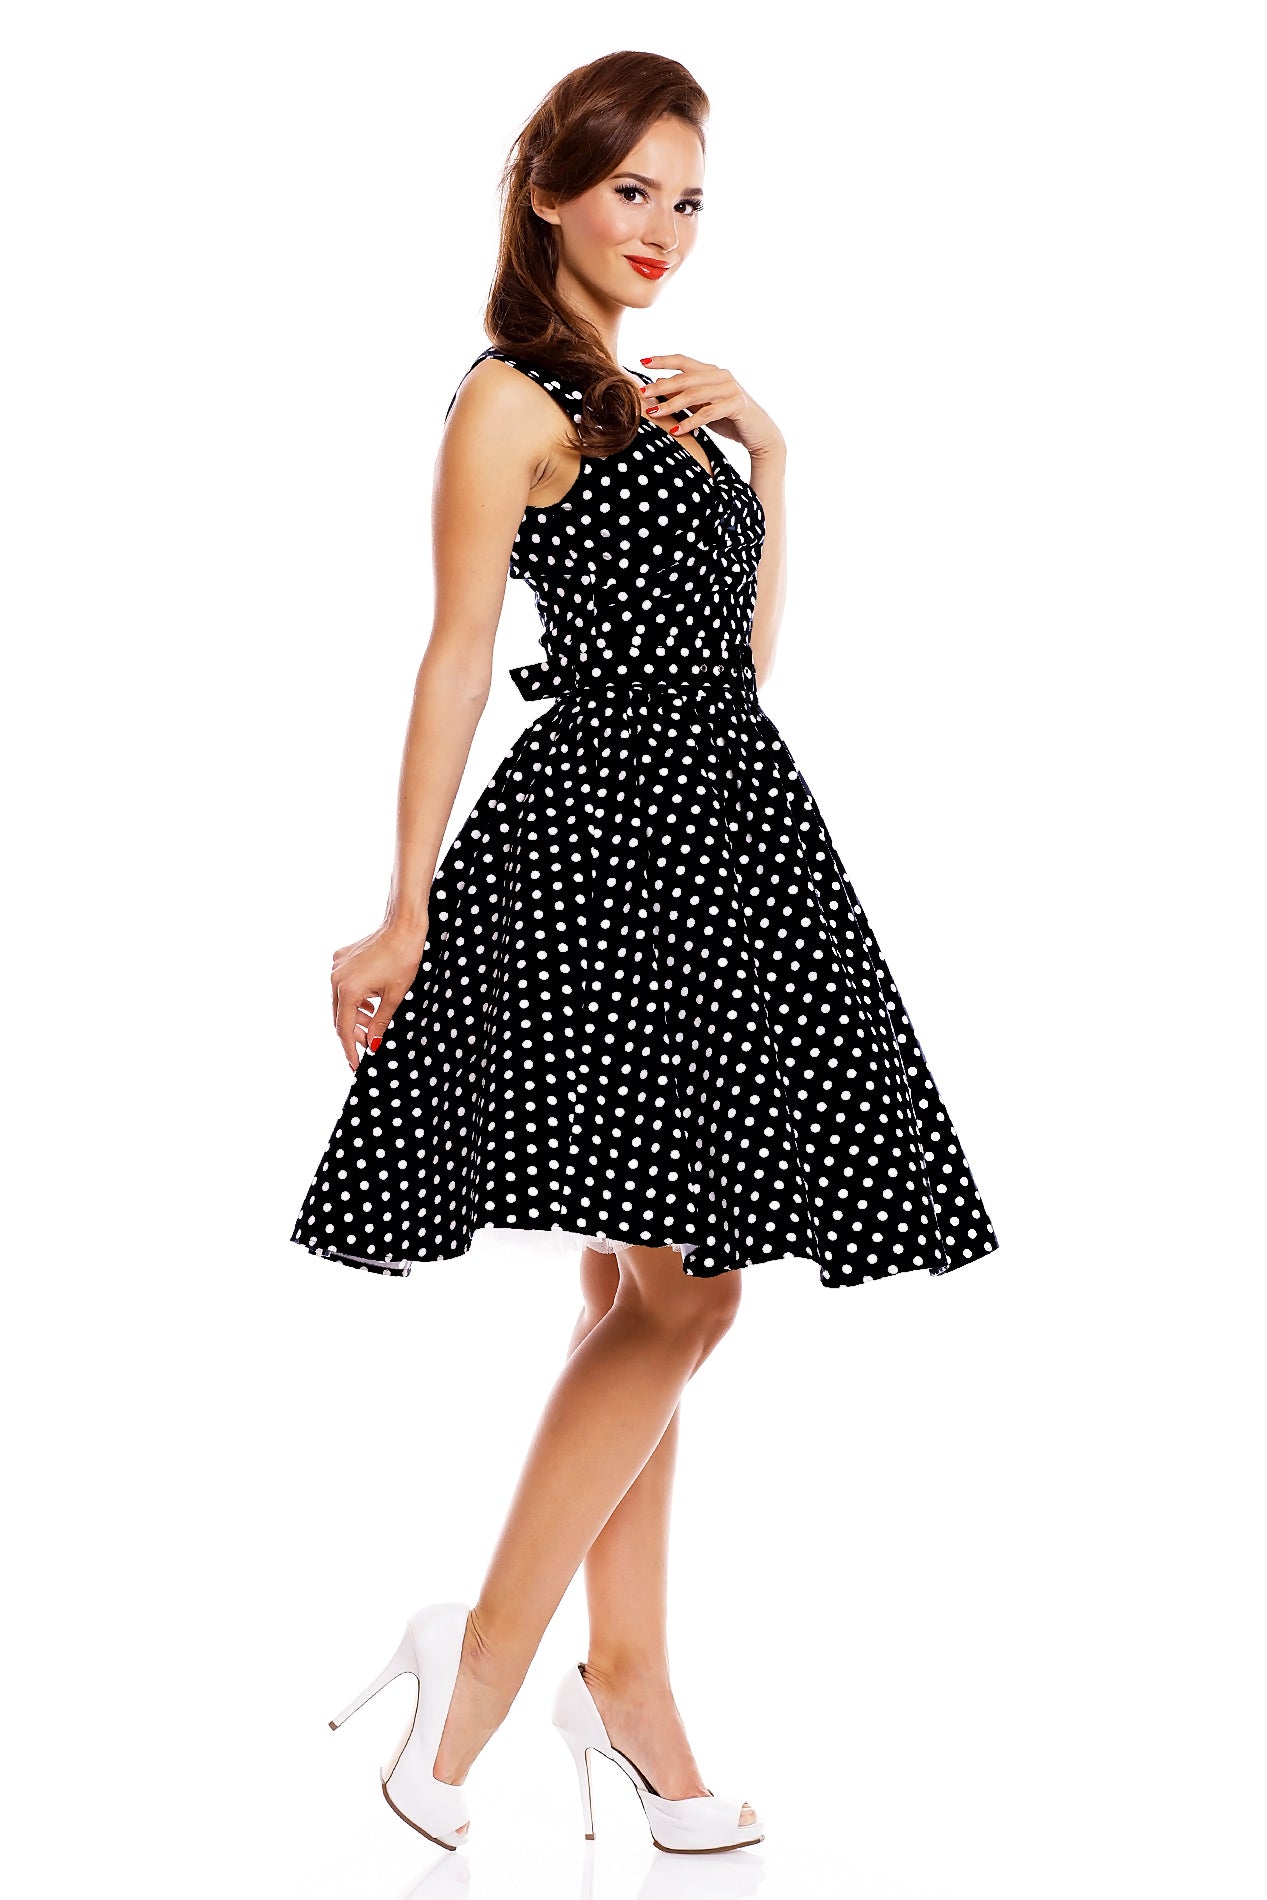 Stylish V-neck Vintage Inspired Swing Dress in Black Polka Dots